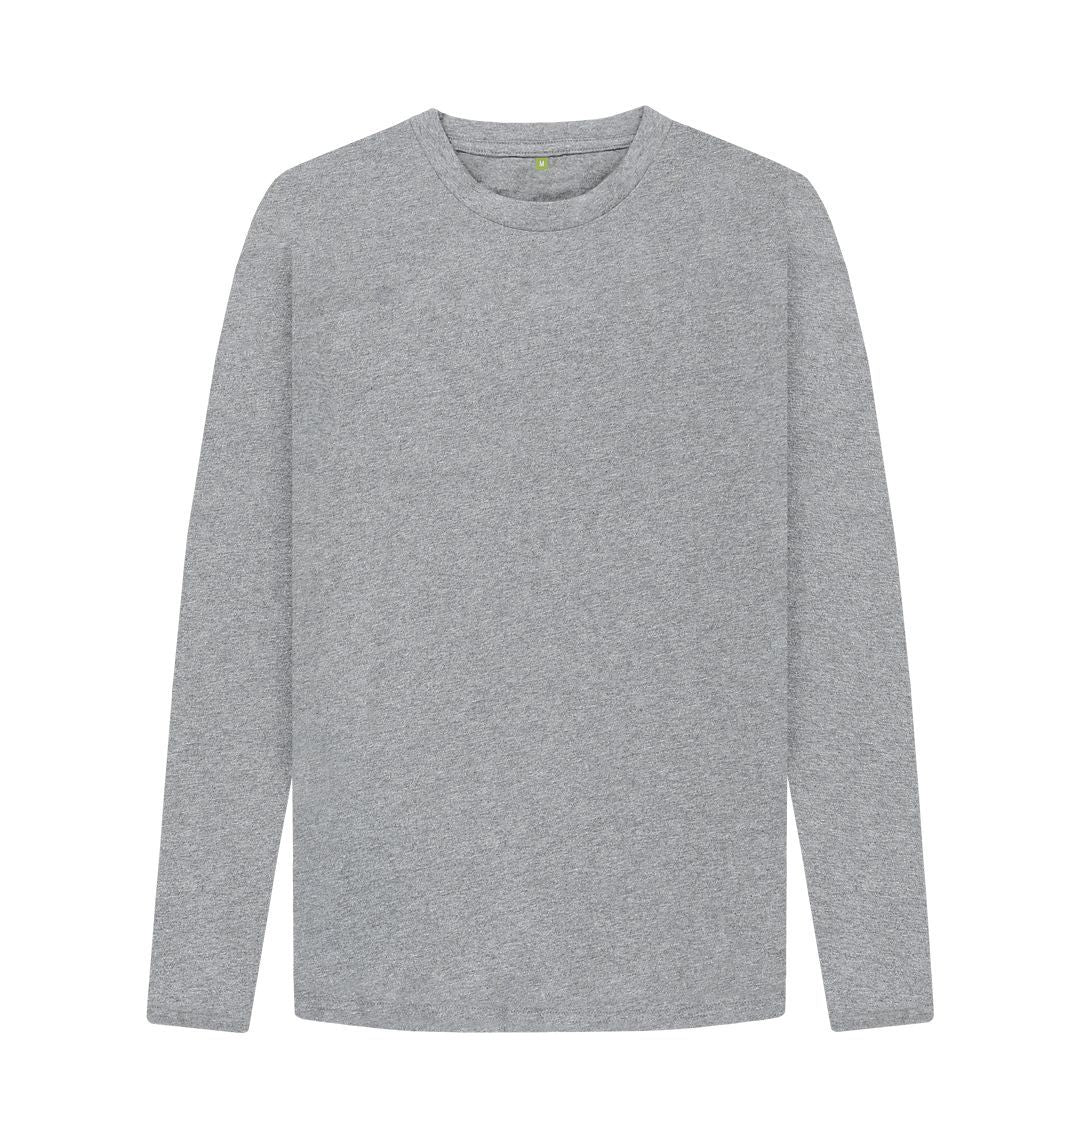 Athletic Grey Men's organic cotton long sleeve t-shirt